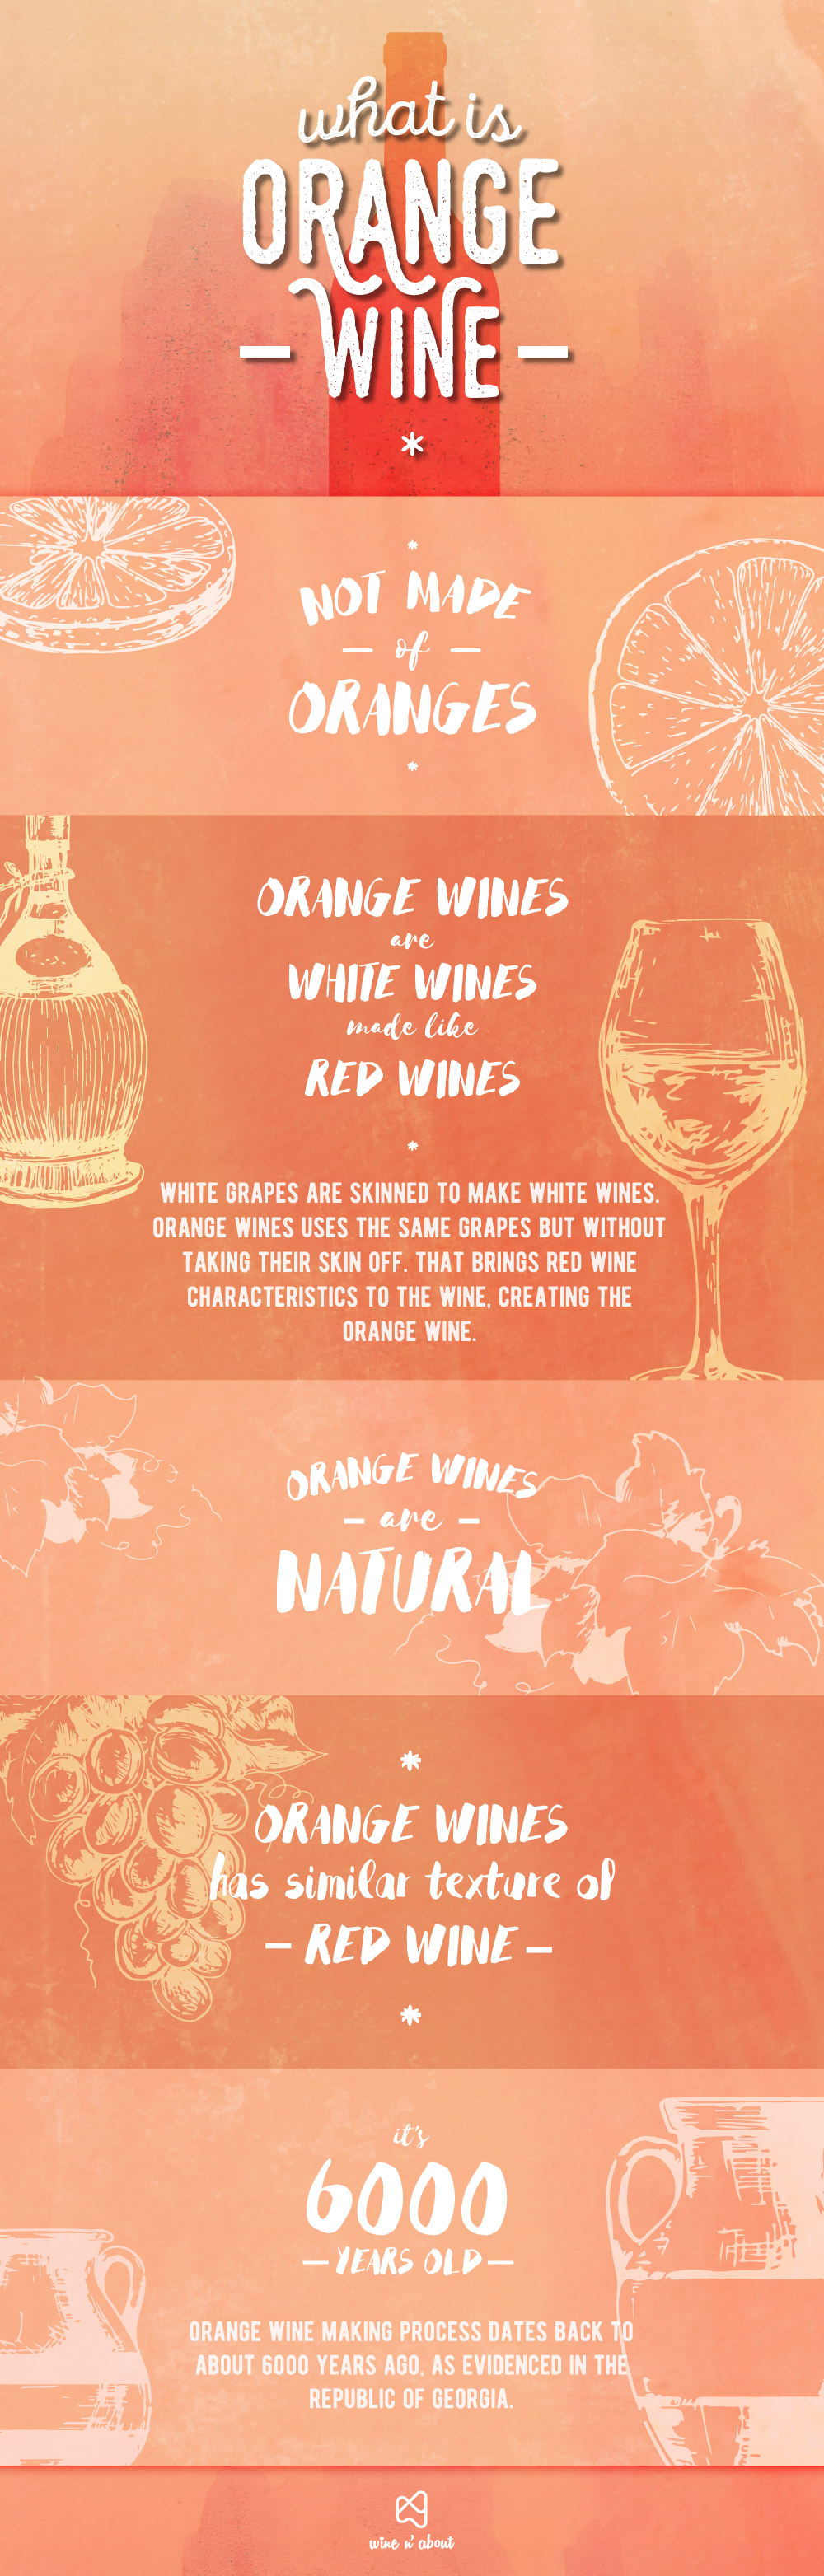 orangeWine-infographics-draft-03 (1)